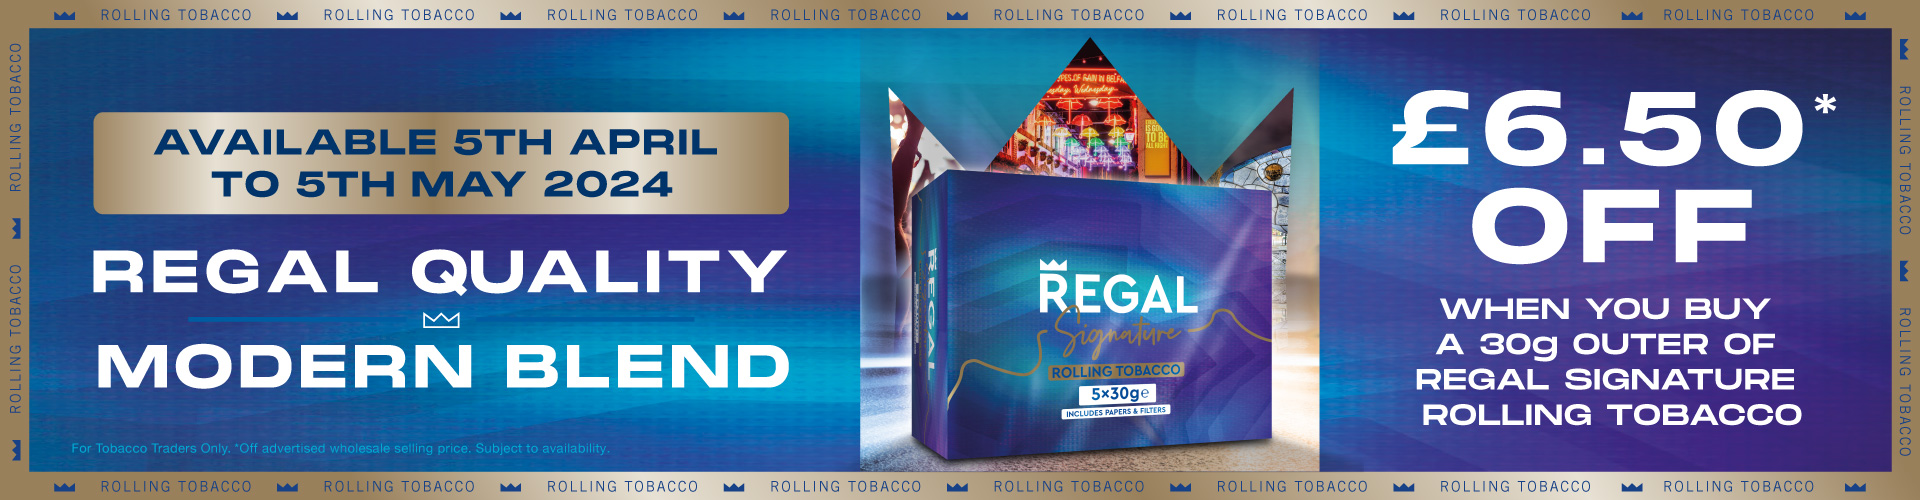 NEW Regal Signature Rolling Tobacco